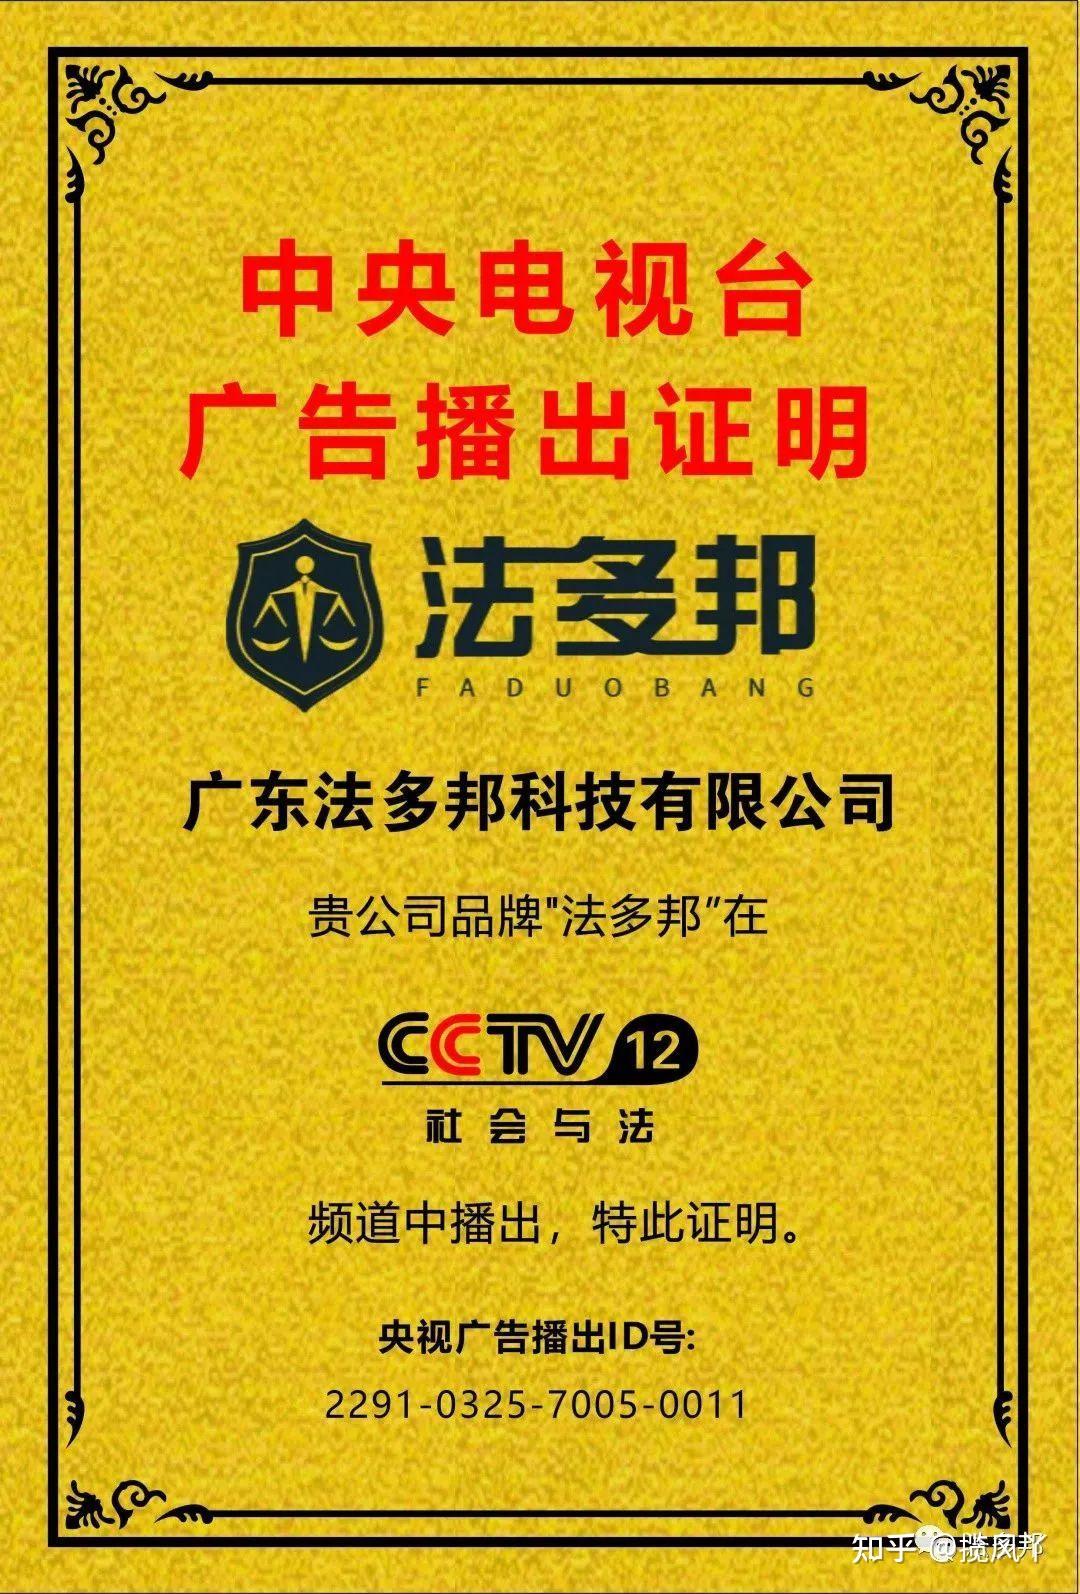 CCTV央视广告品牌展播优势有哪些？ | 九州鸿鹏